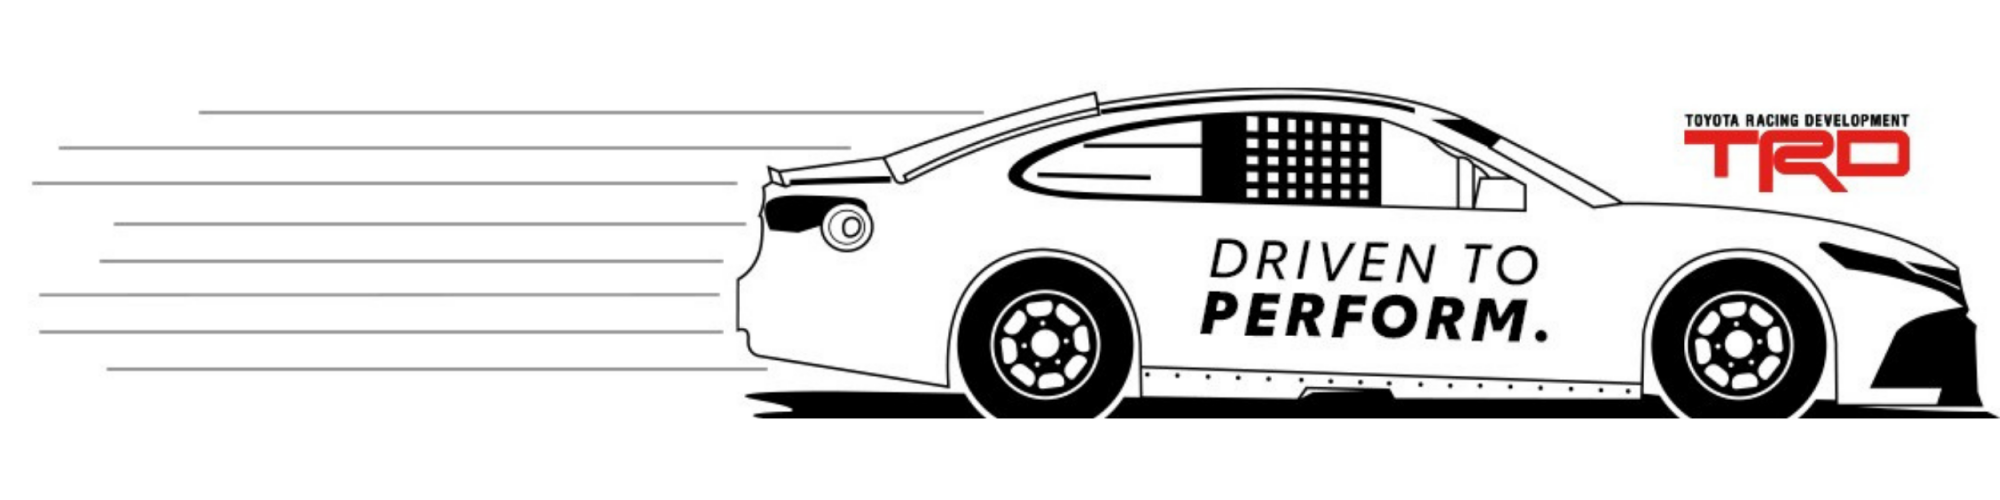 Toyota Racing Development  cover image